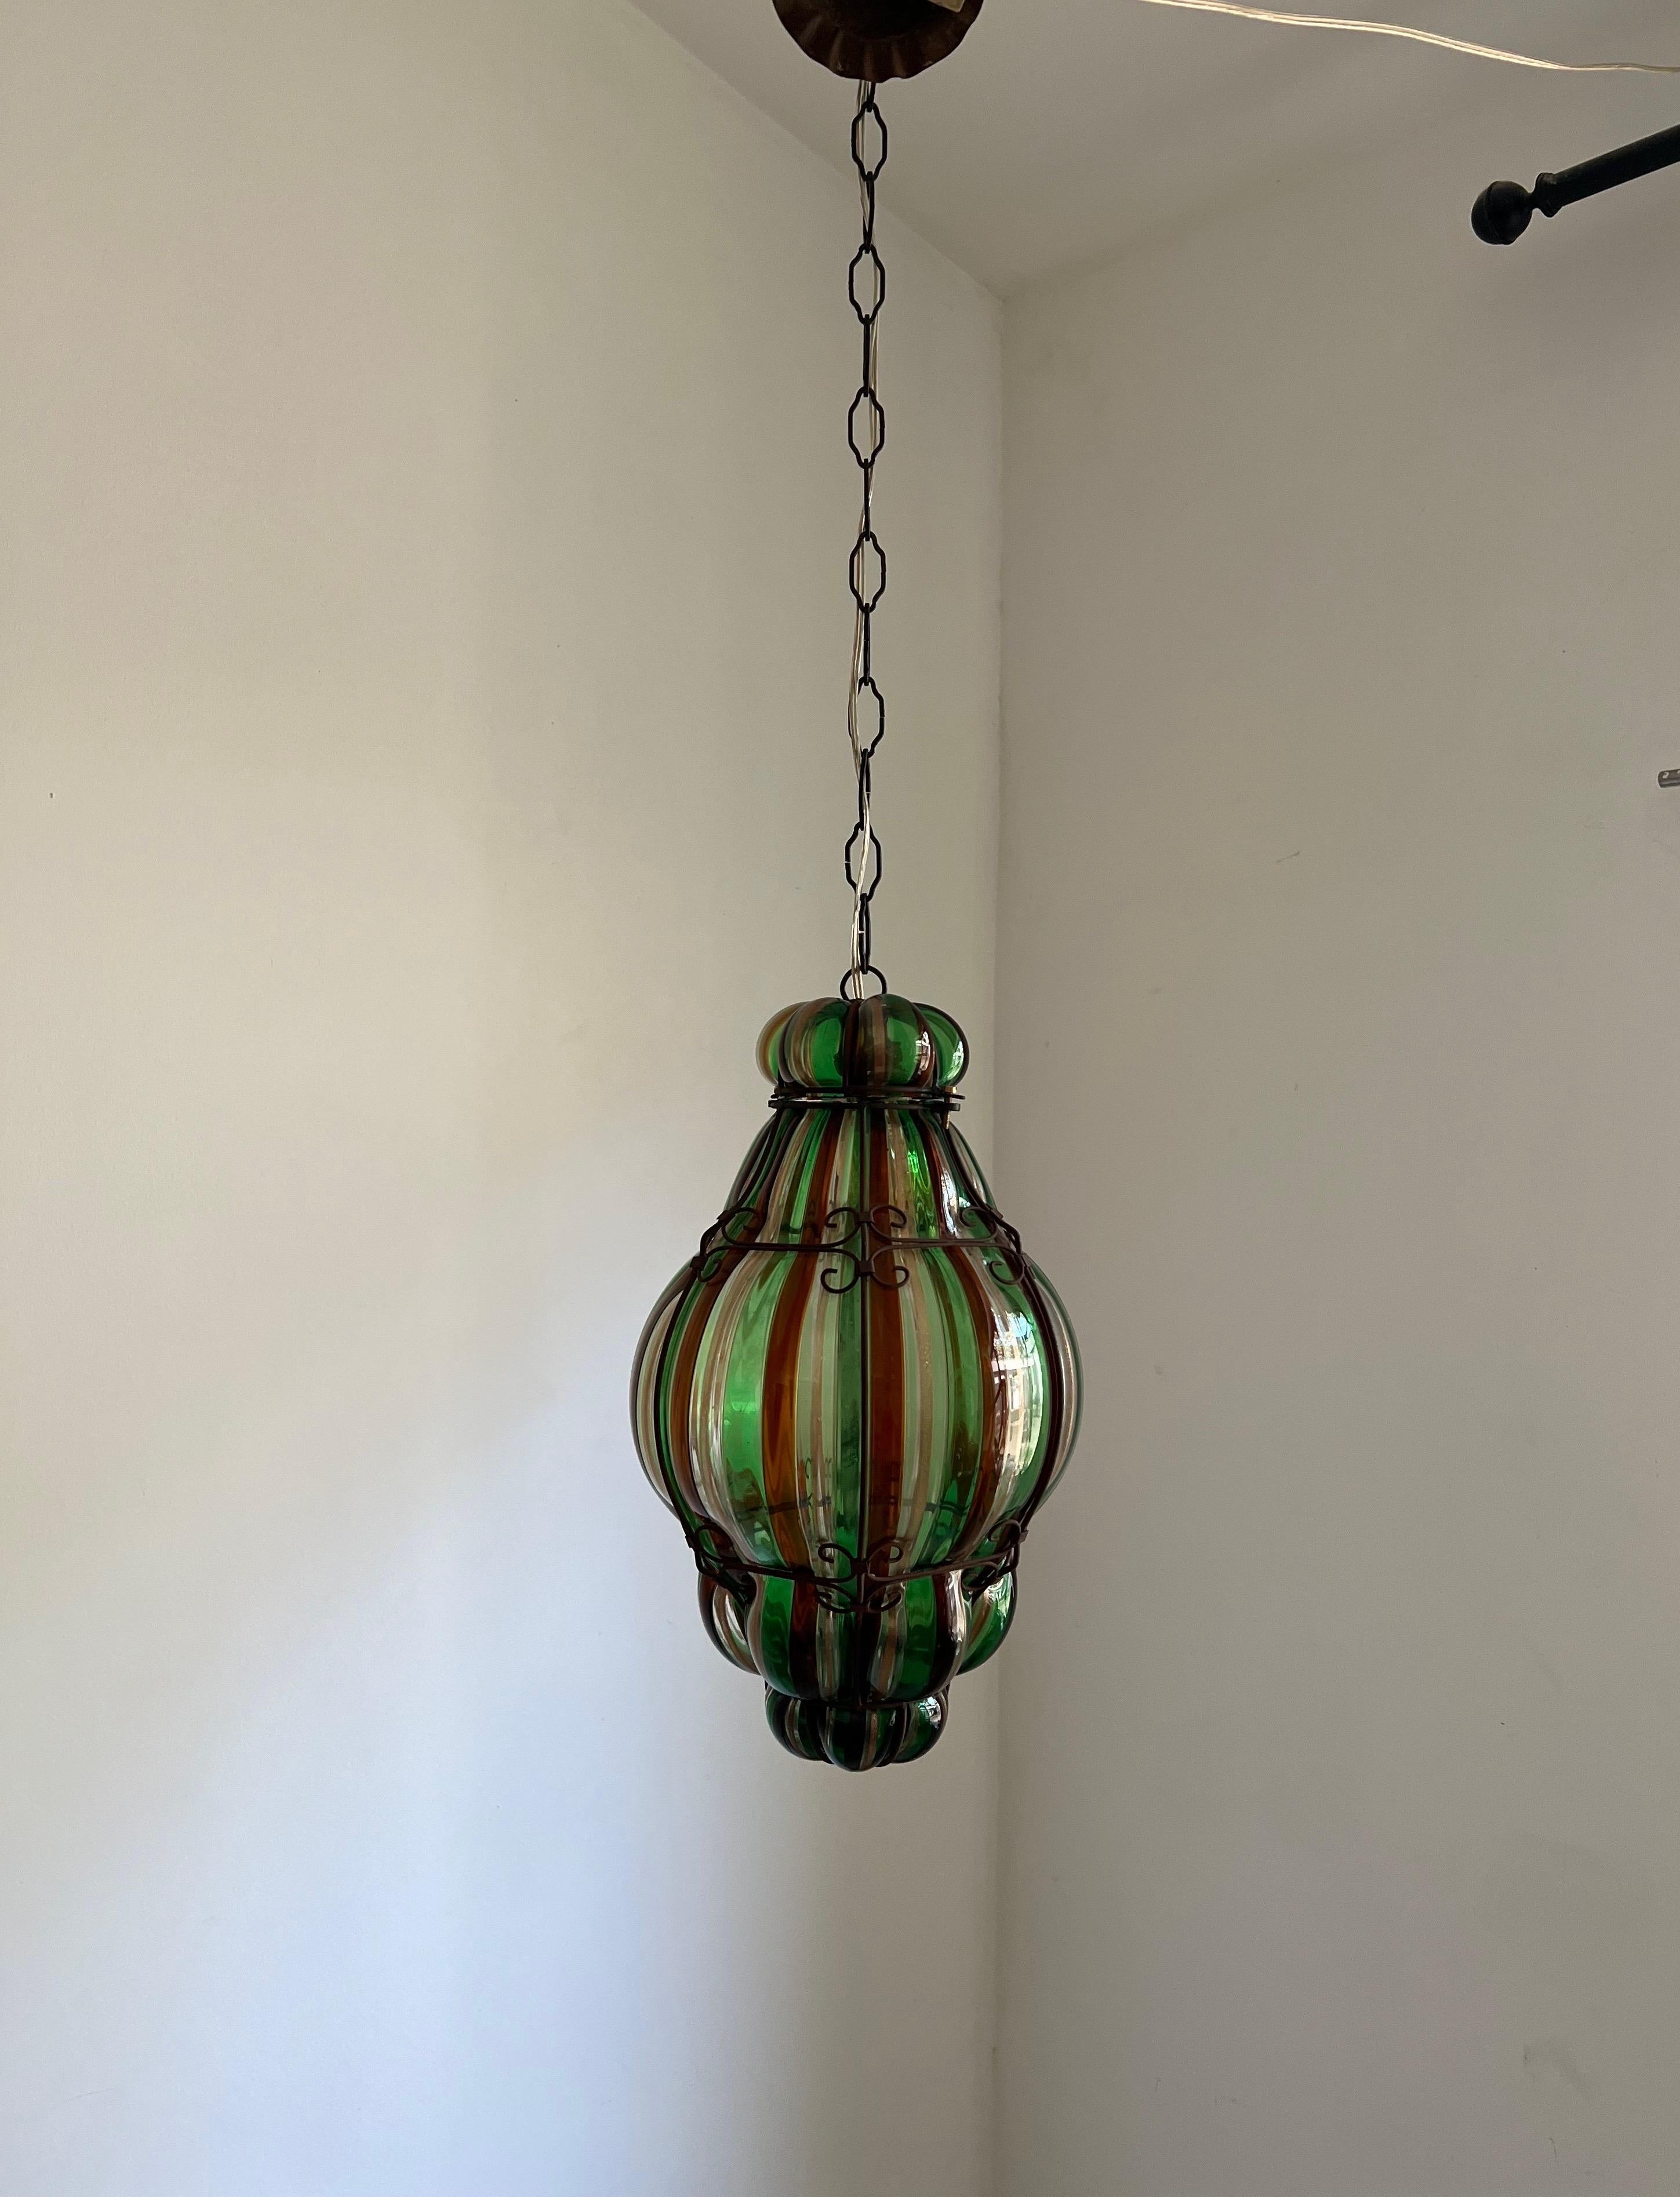 Hand-Crafted 1940s Venini Lantern in Murano Glass by Fulvio Bianconi For Sale